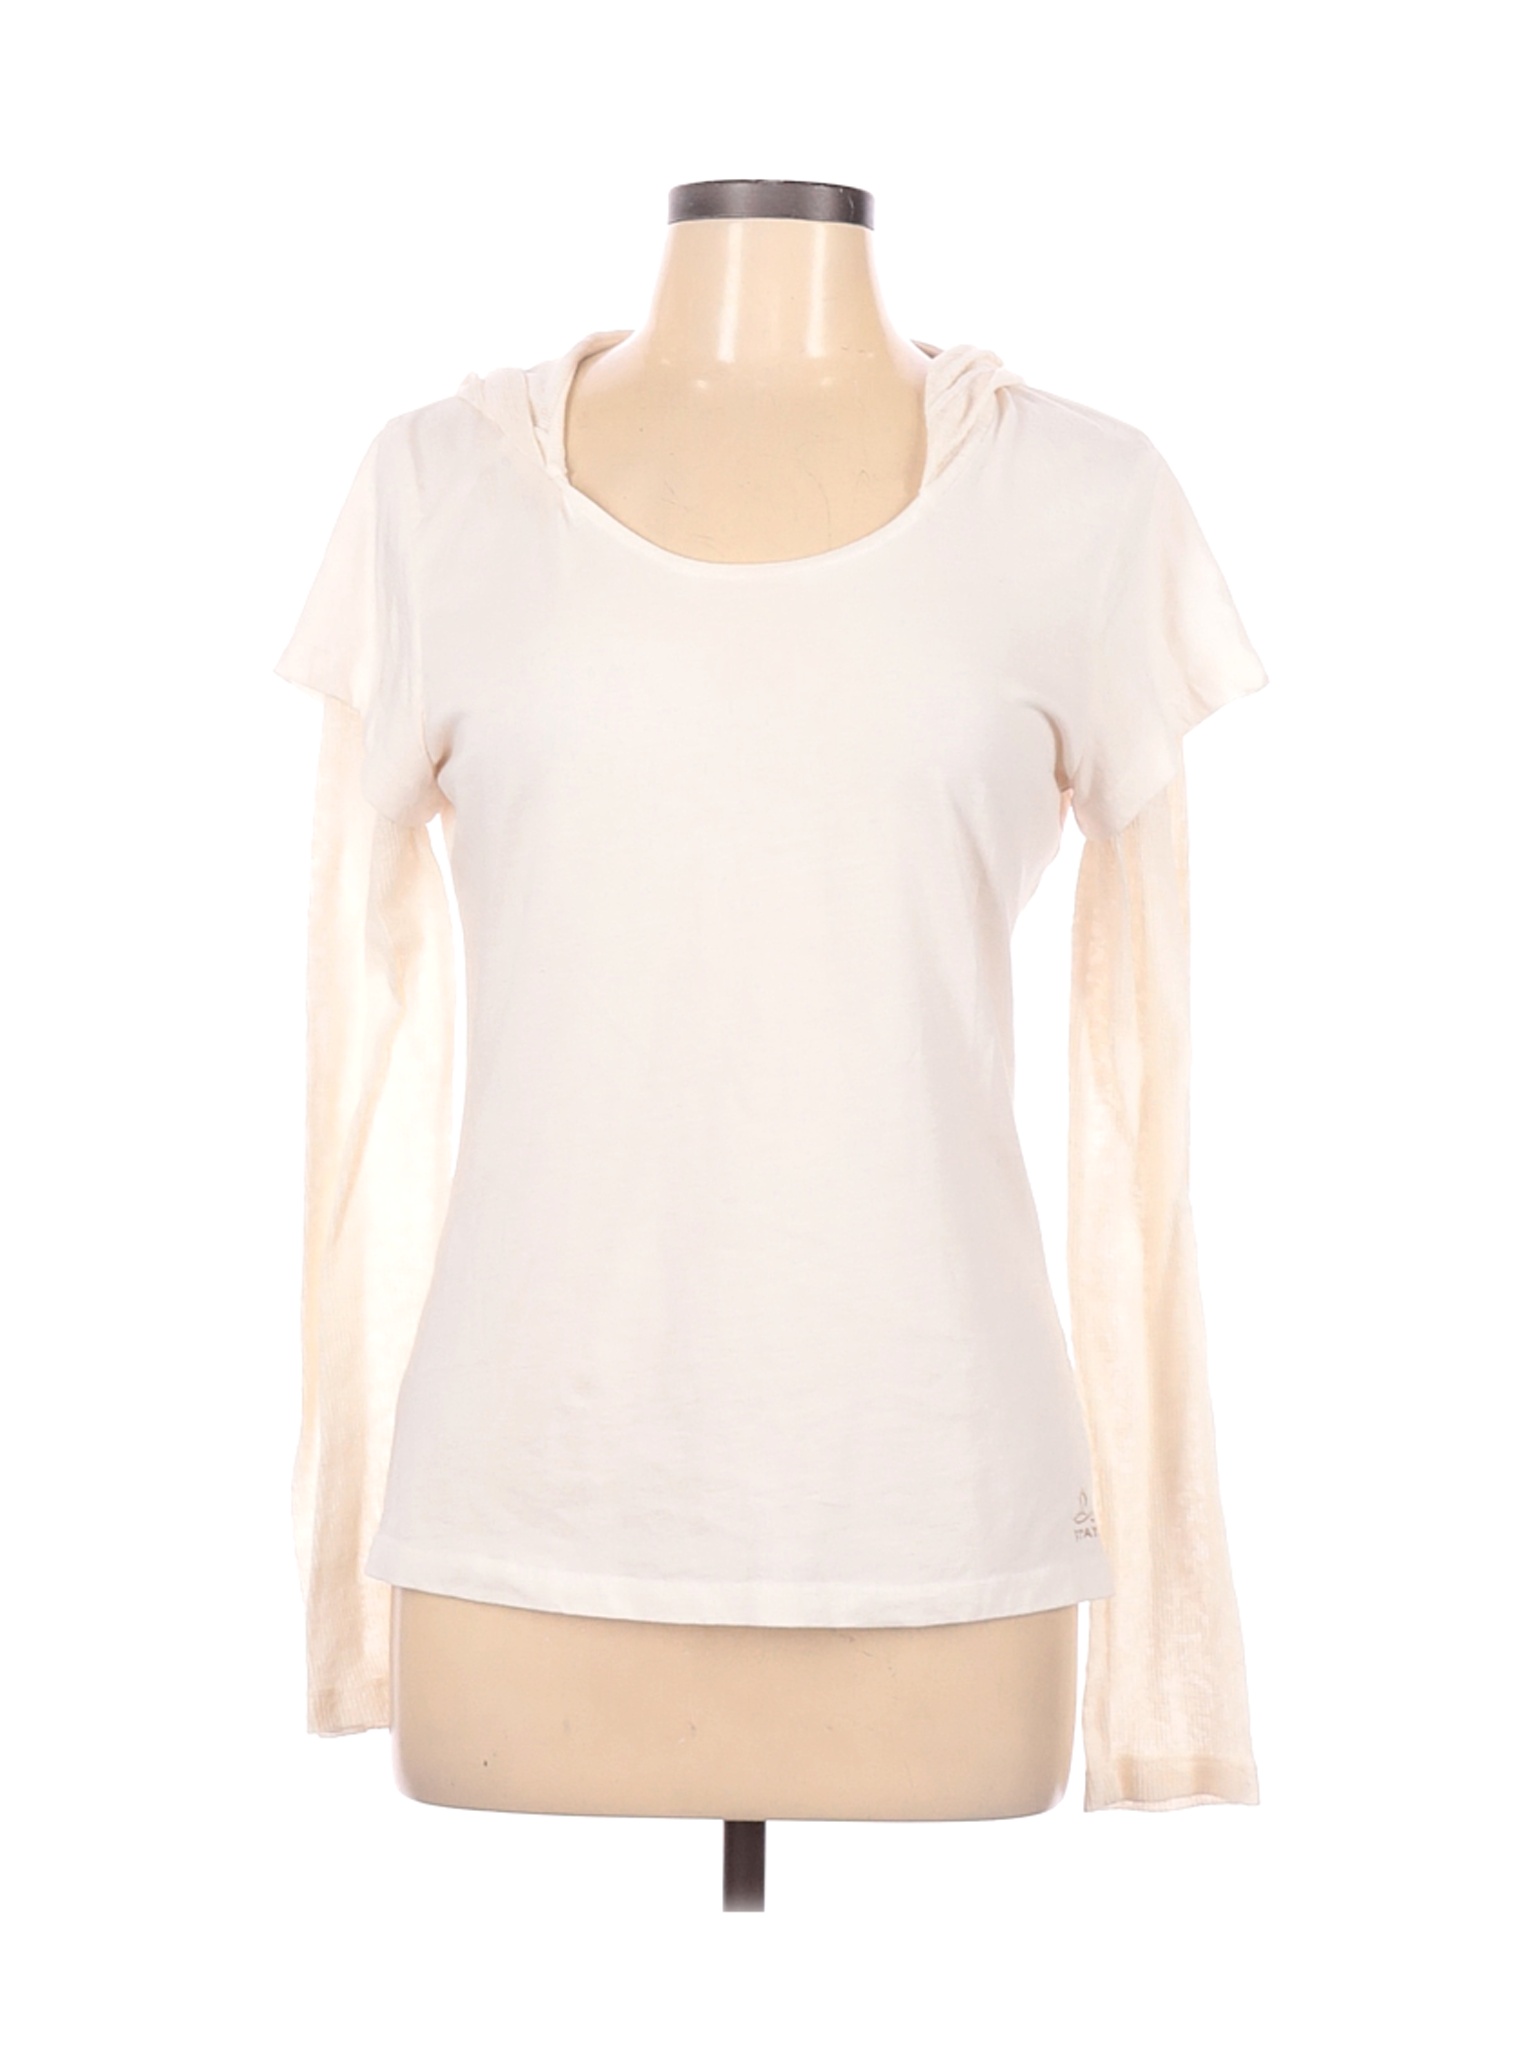 PrAna Women Ivory Long Sleeve Top L | eBay